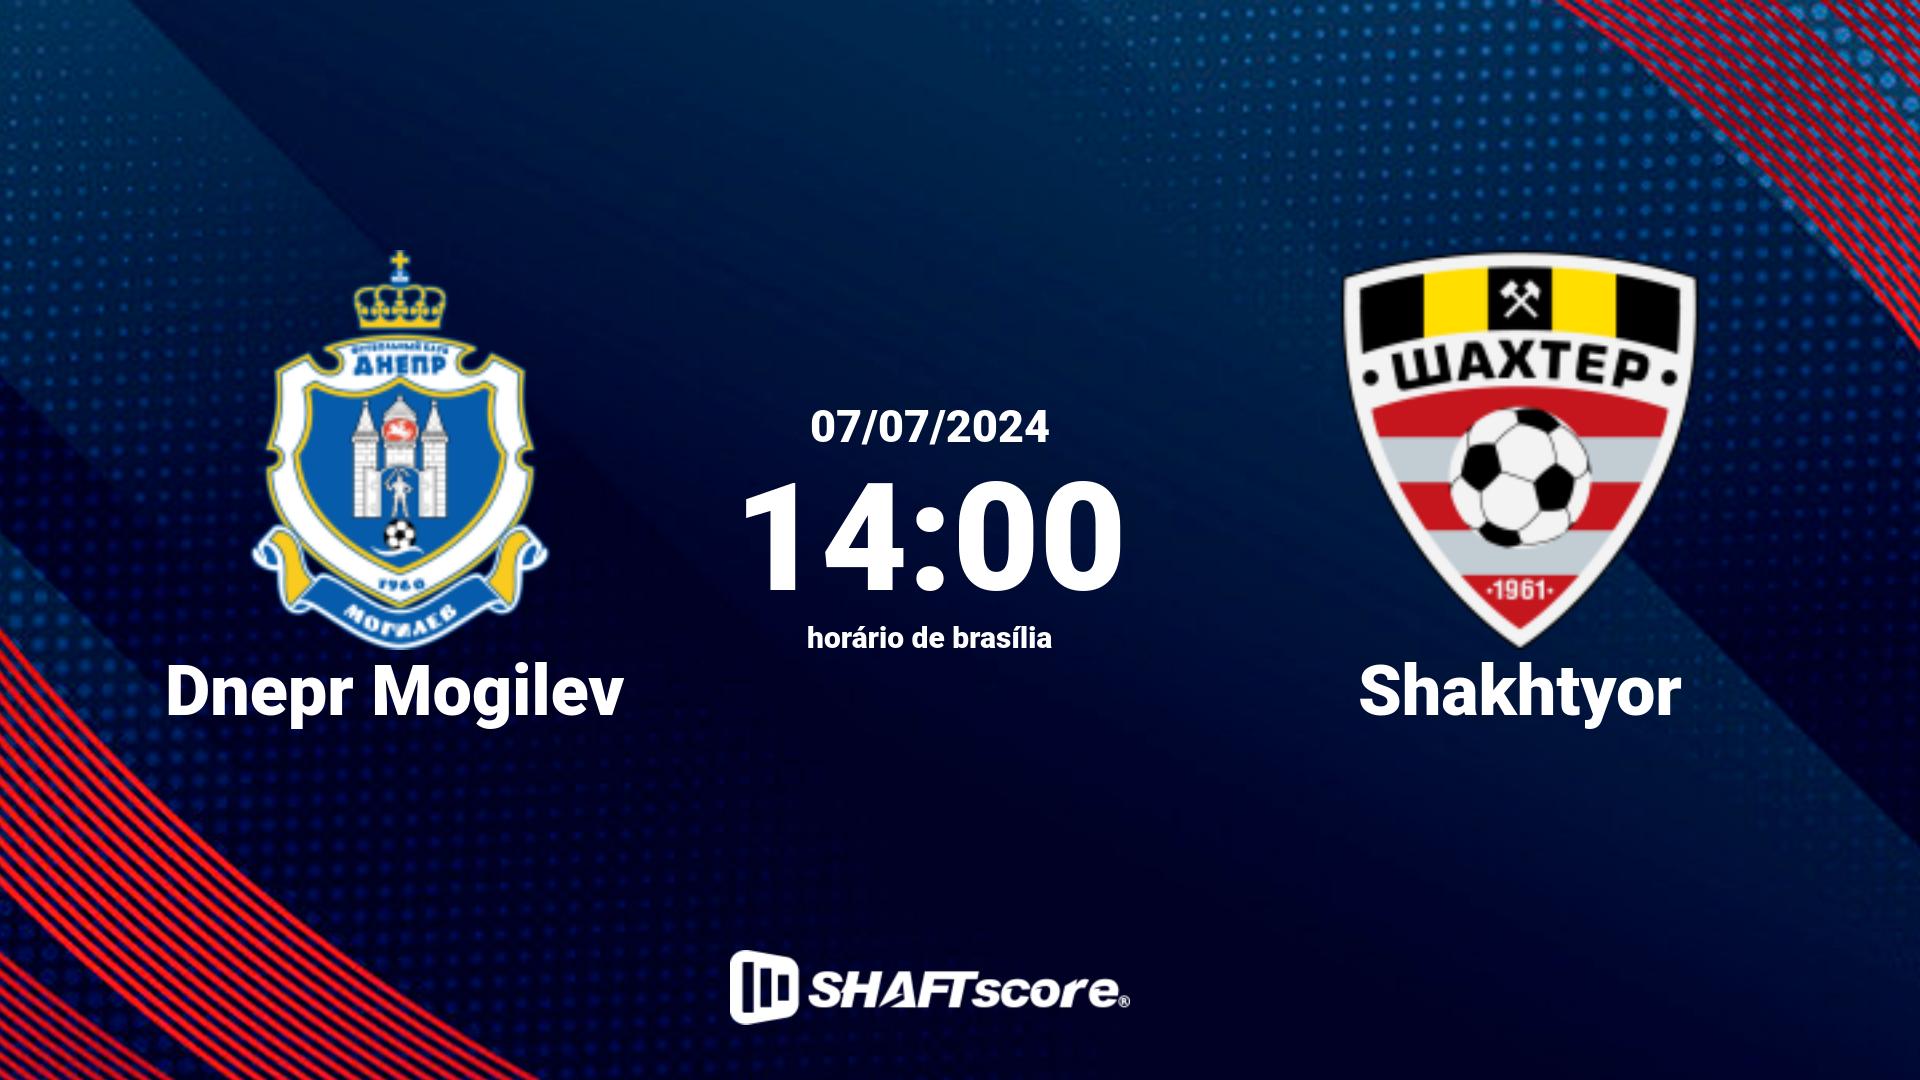 Estatísticas do jogo Dnepr Mogilev vs Shakhtyor 07.07 14:00